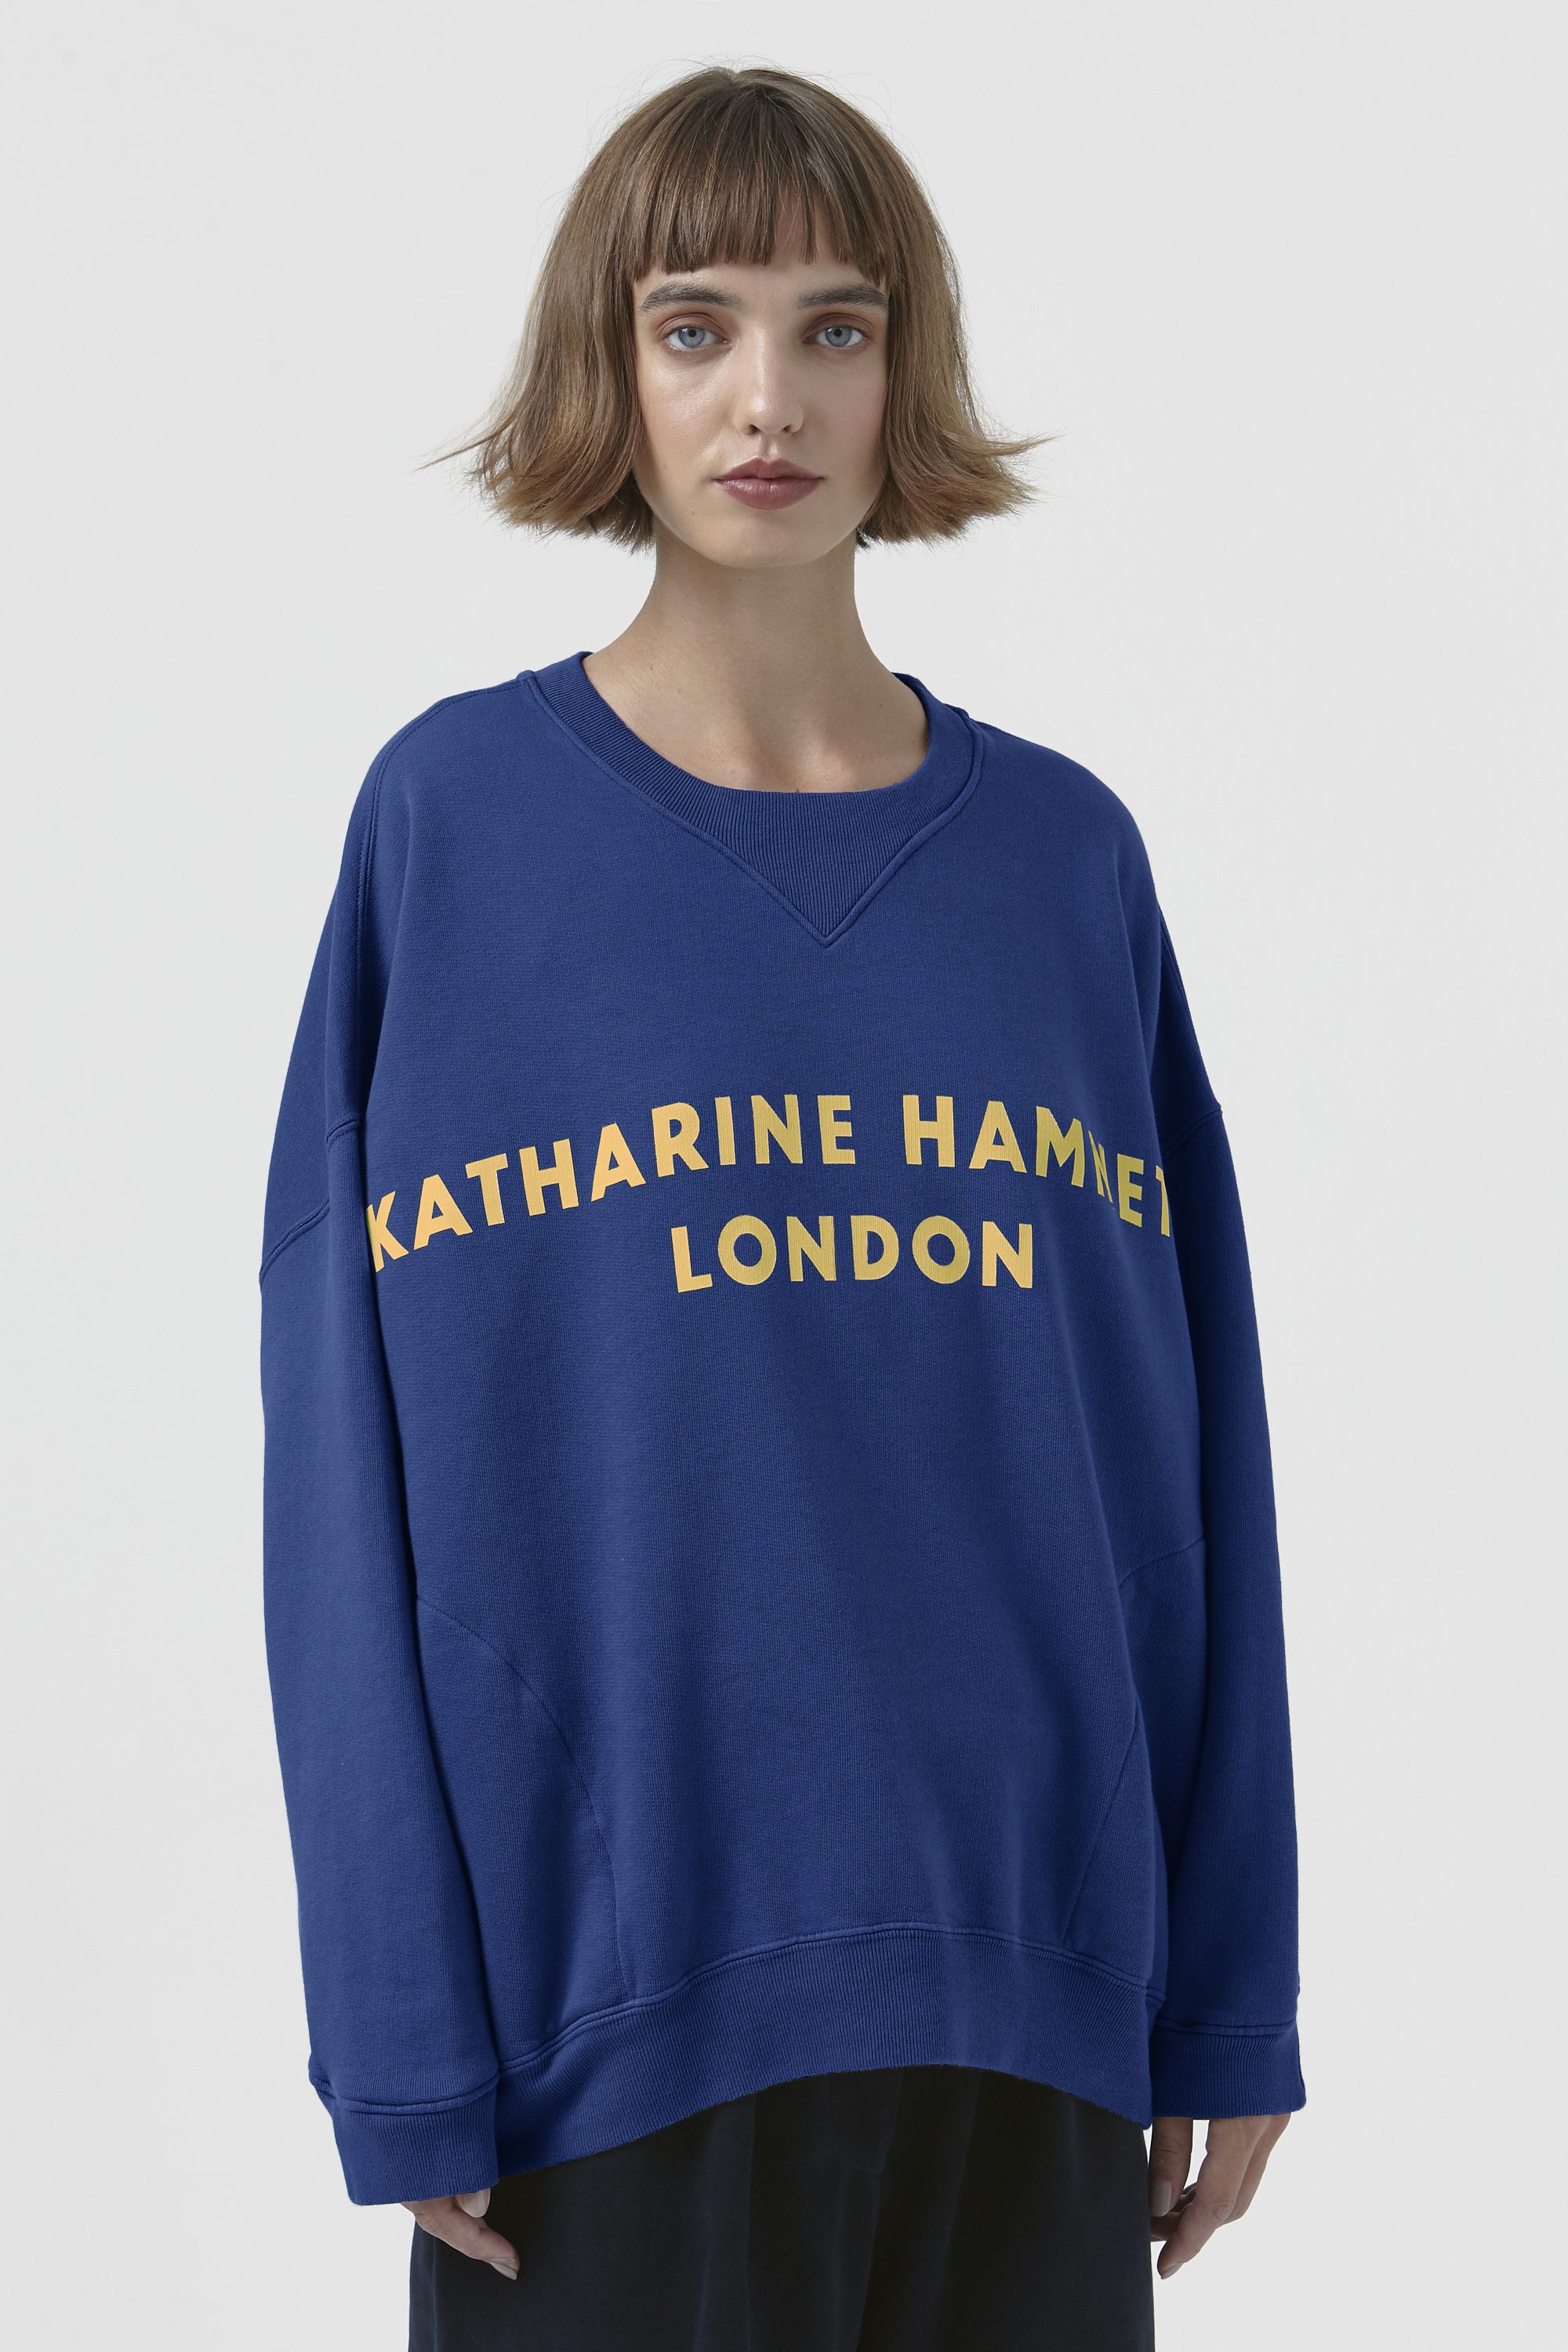 Katharine Hamnett London - Vince deep blue organic cotton sweater